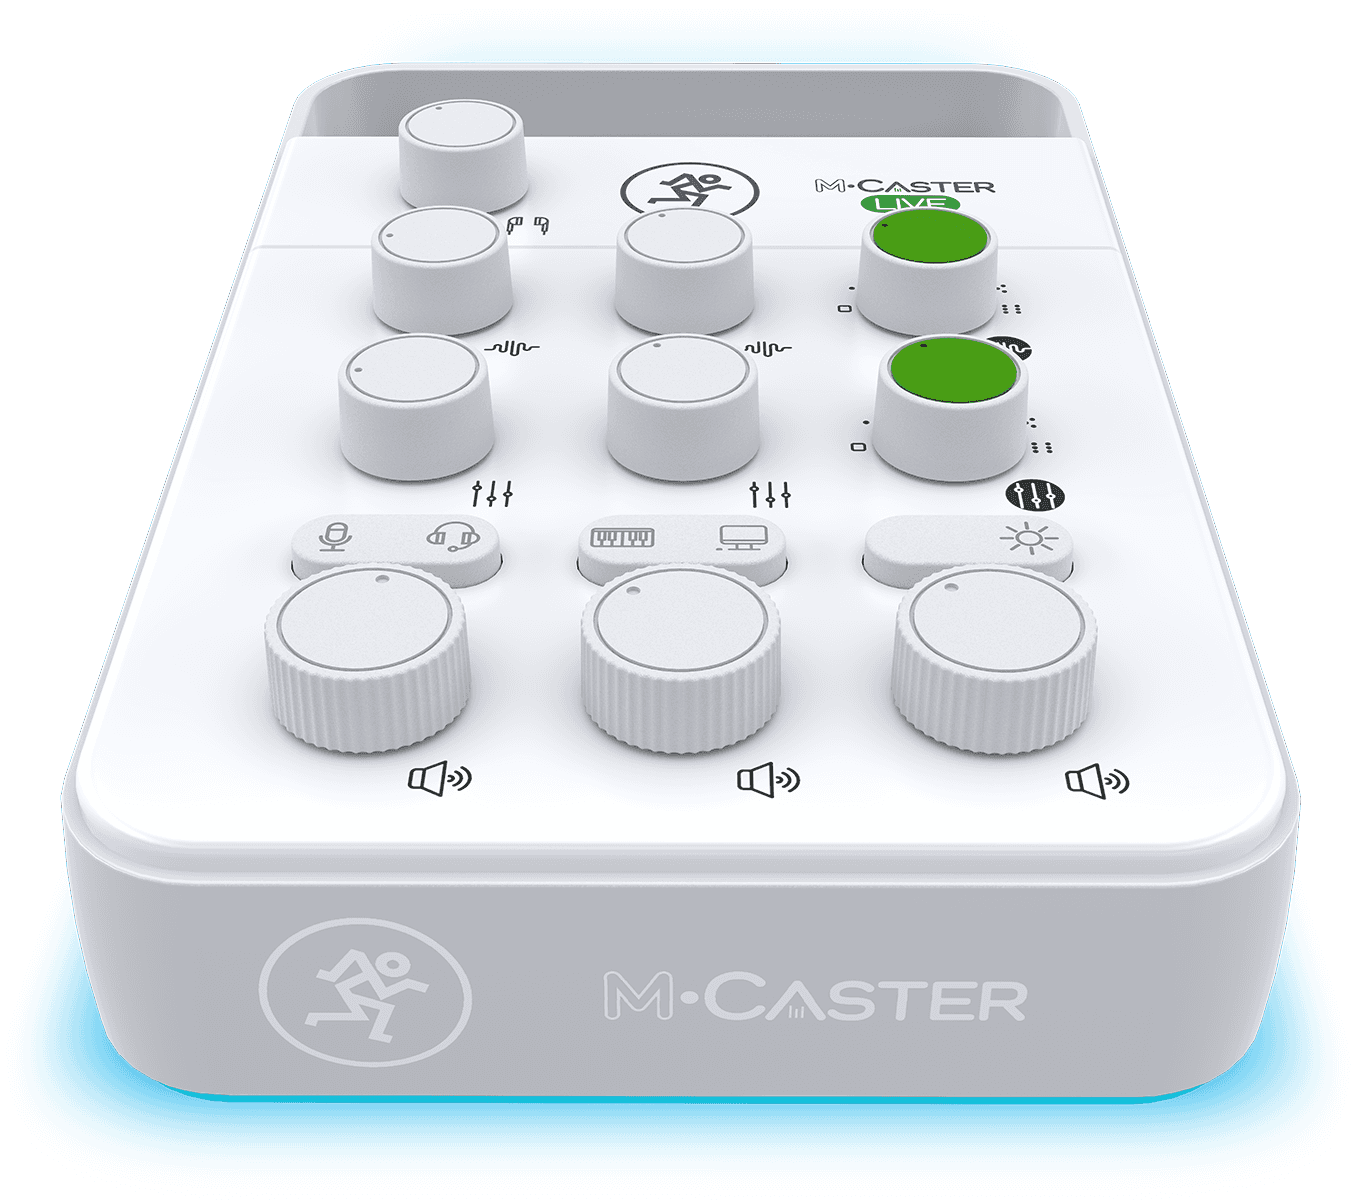 Mackie Mcaster-live White - USB audio interface - Variation 8